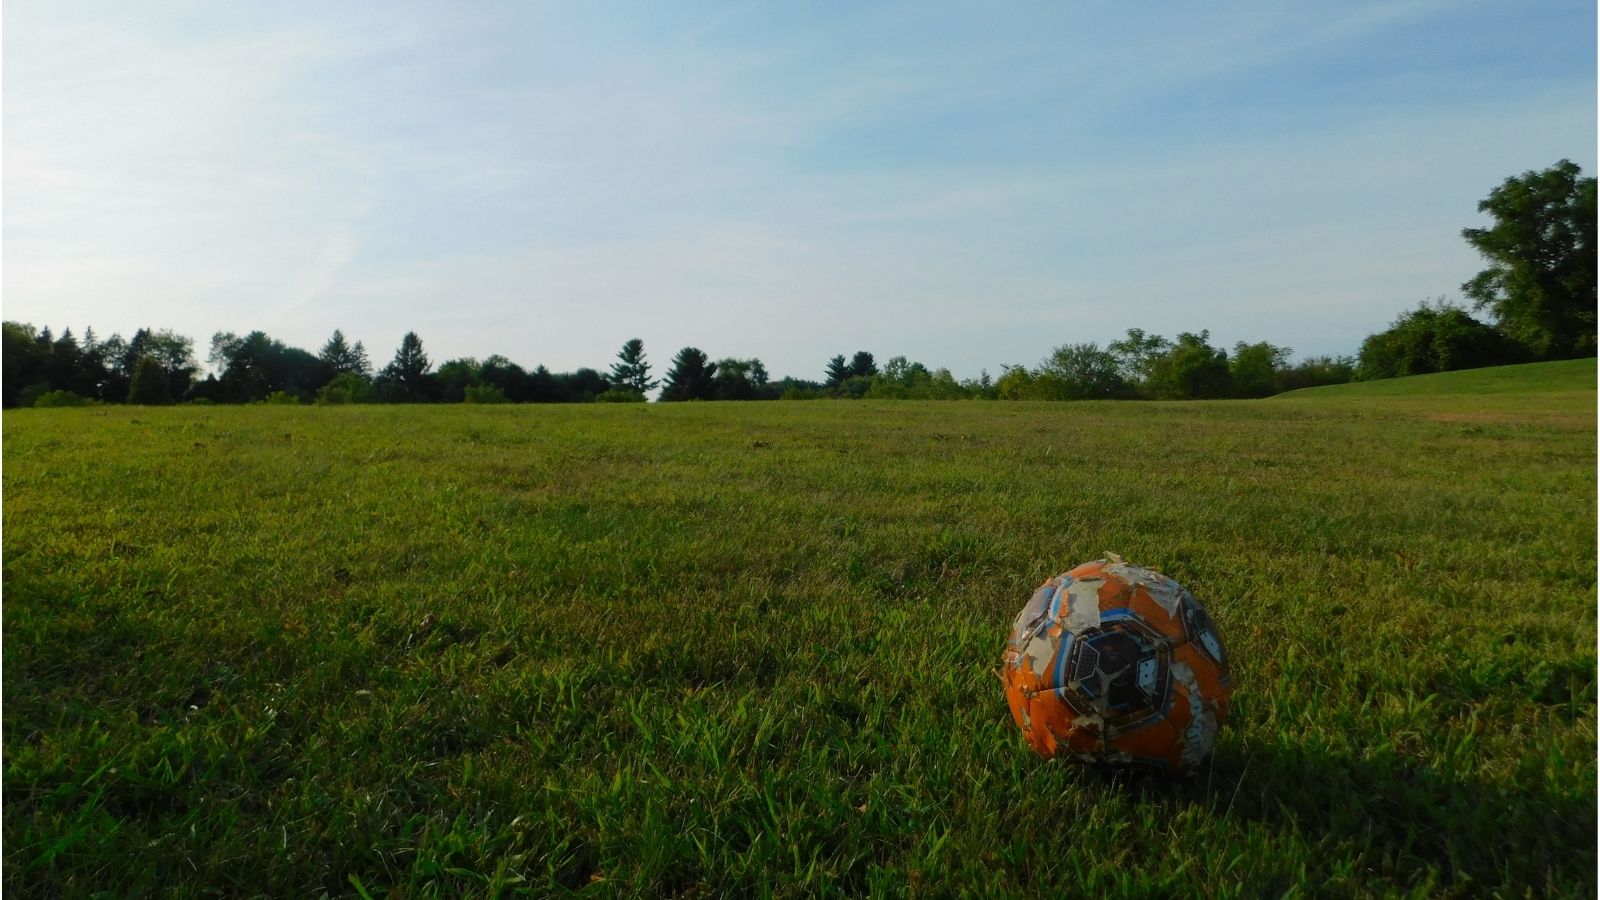 Old football on grass field 